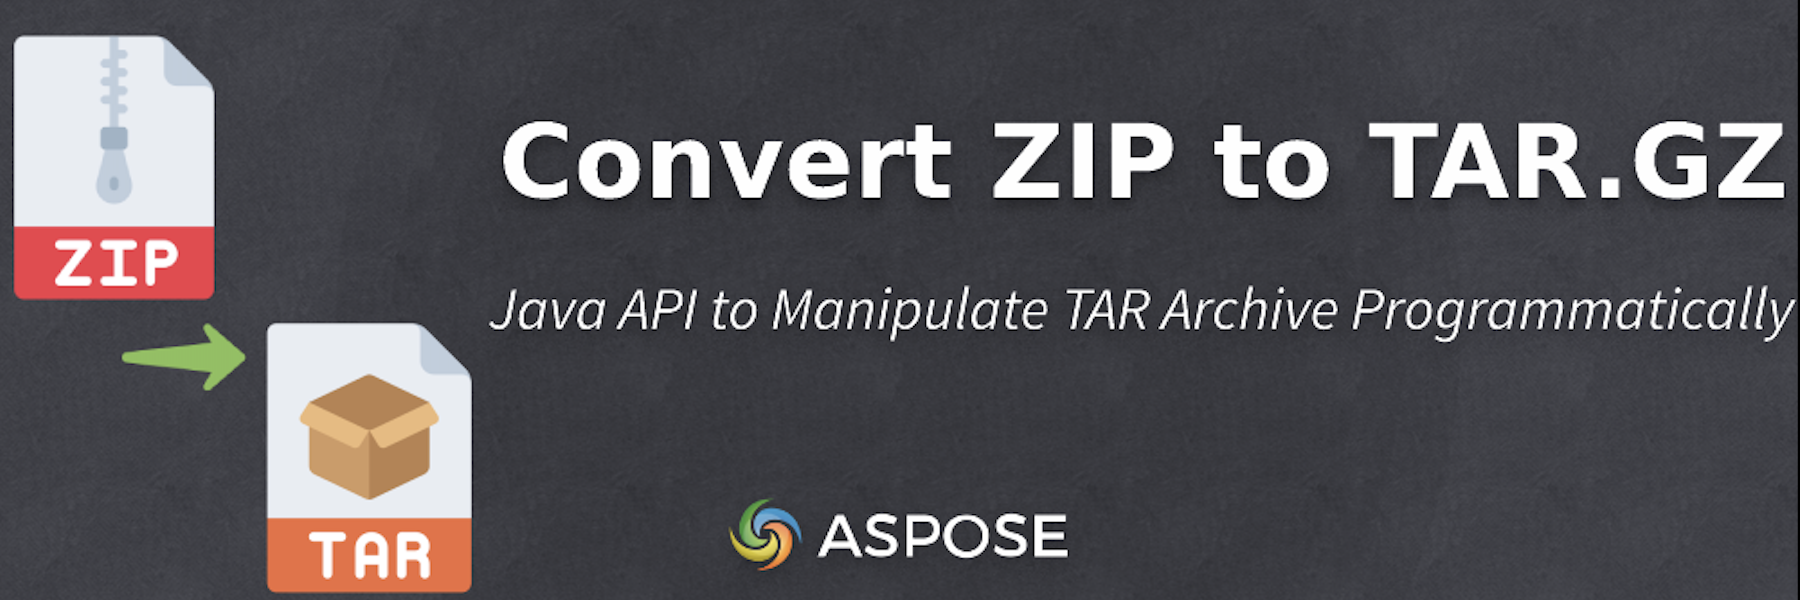 Convert ZIP to TAR.GZ in Java Programmatically